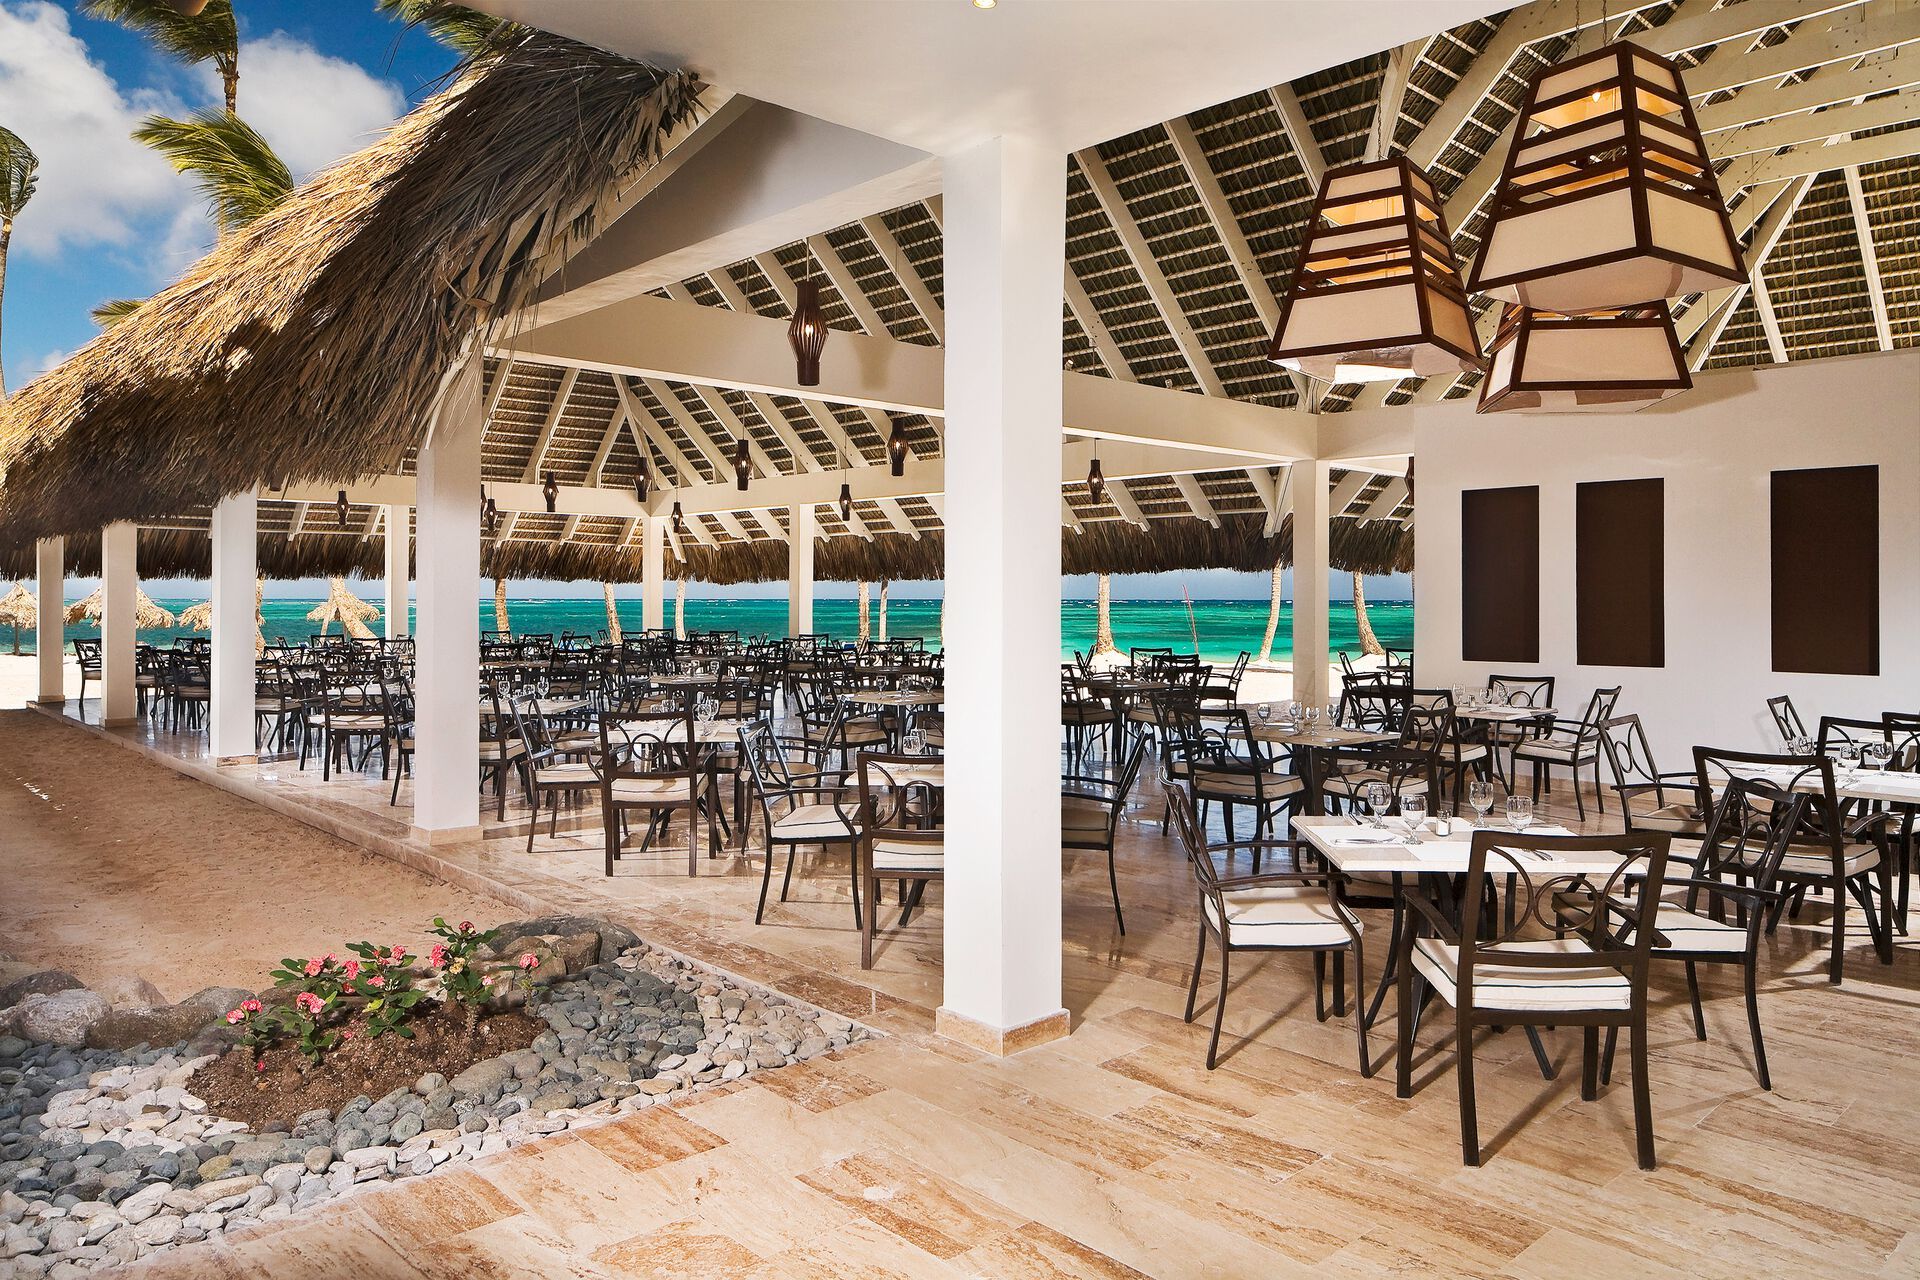 République Dominicaine - Punta Cana - Hôtel Melia Punta Cana Beach Resort 5* - Adult Only